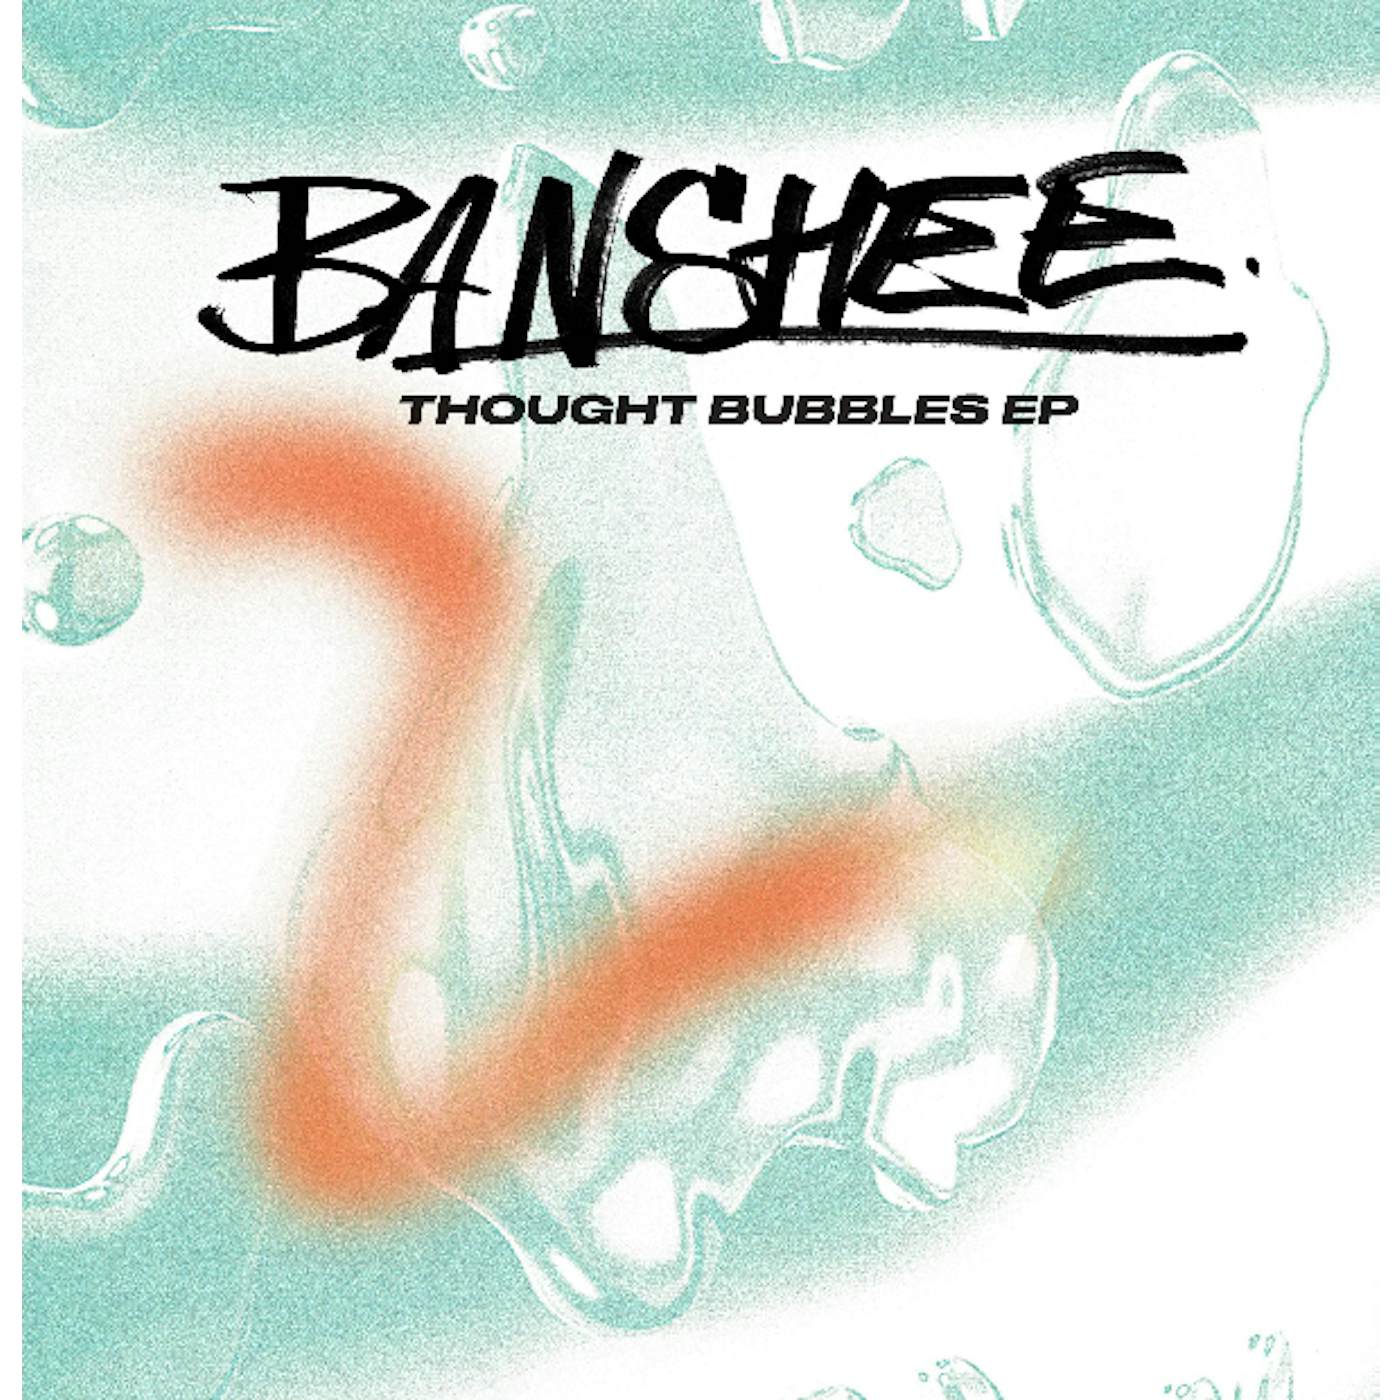 Banshee THOUGHT BUBBLES Vinyl Record